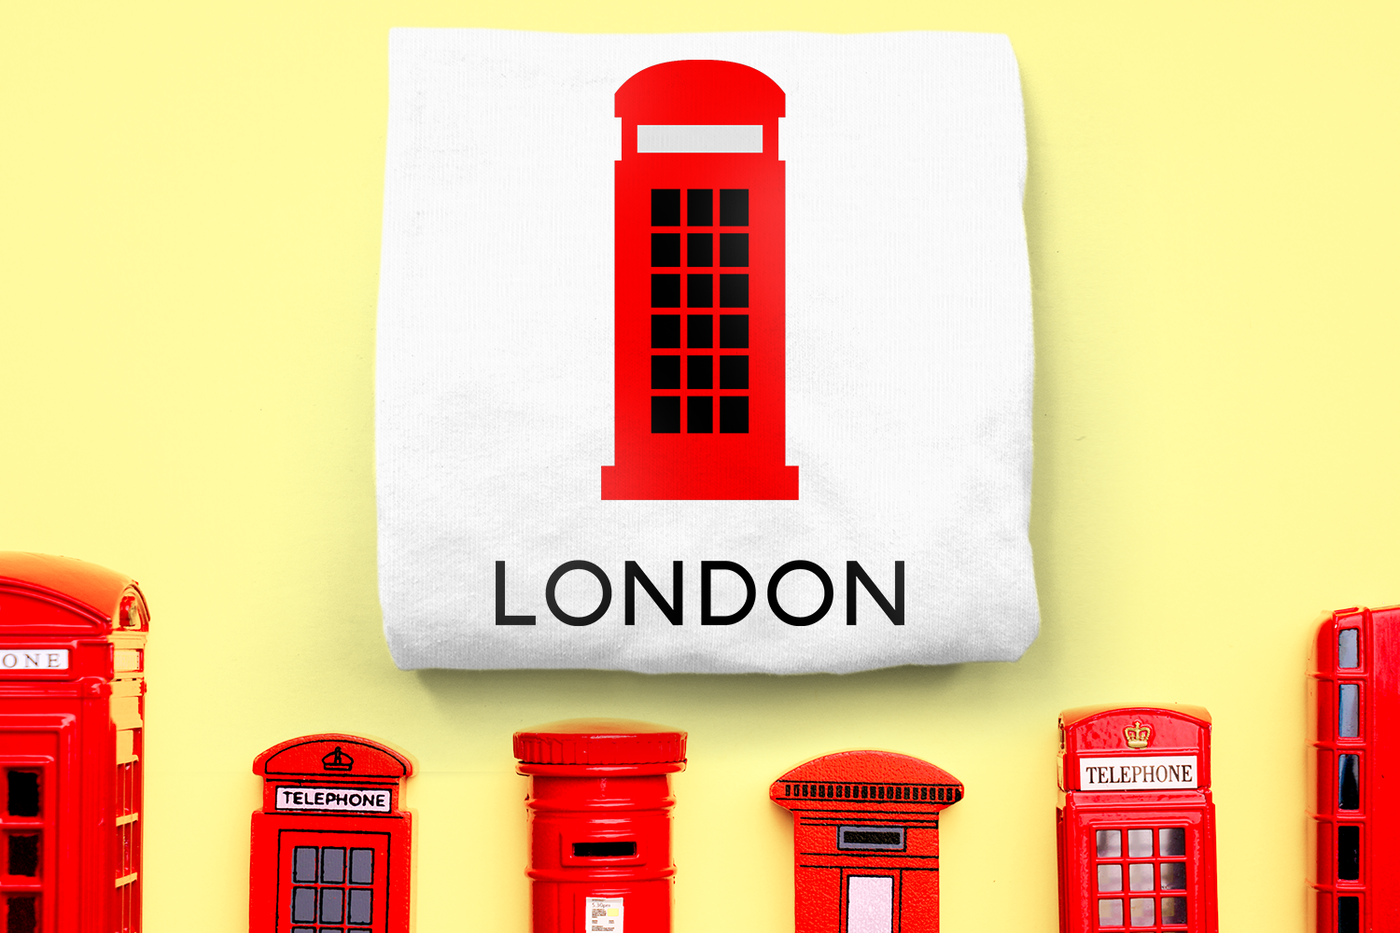 London phone booth SVG design